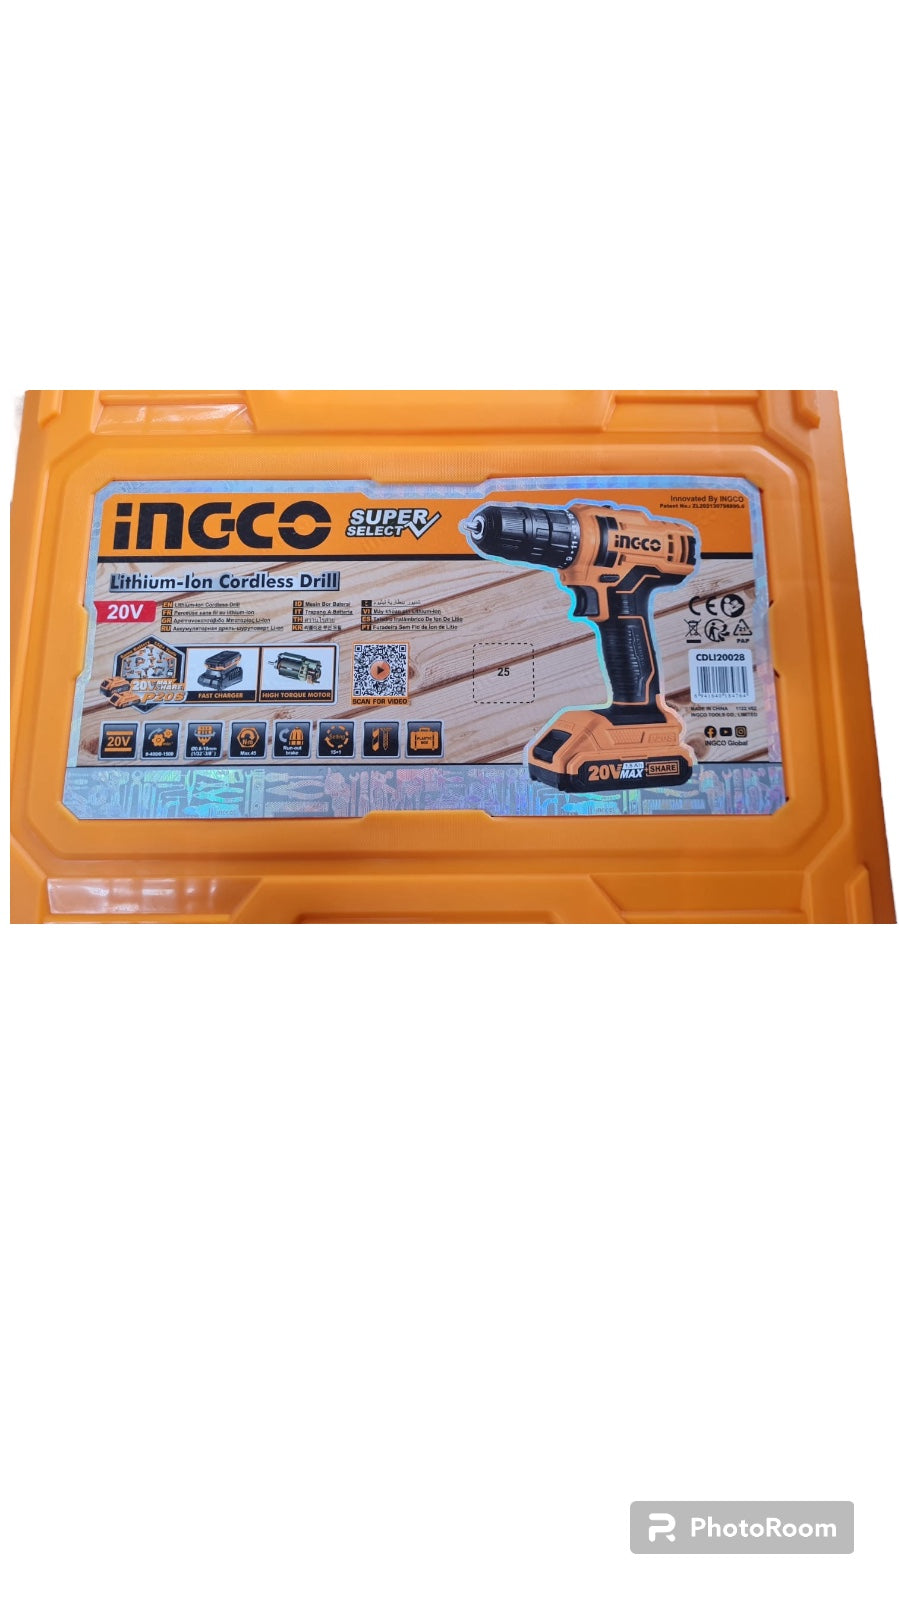 Ingco Lithium-lon-cordless Drill (super select)